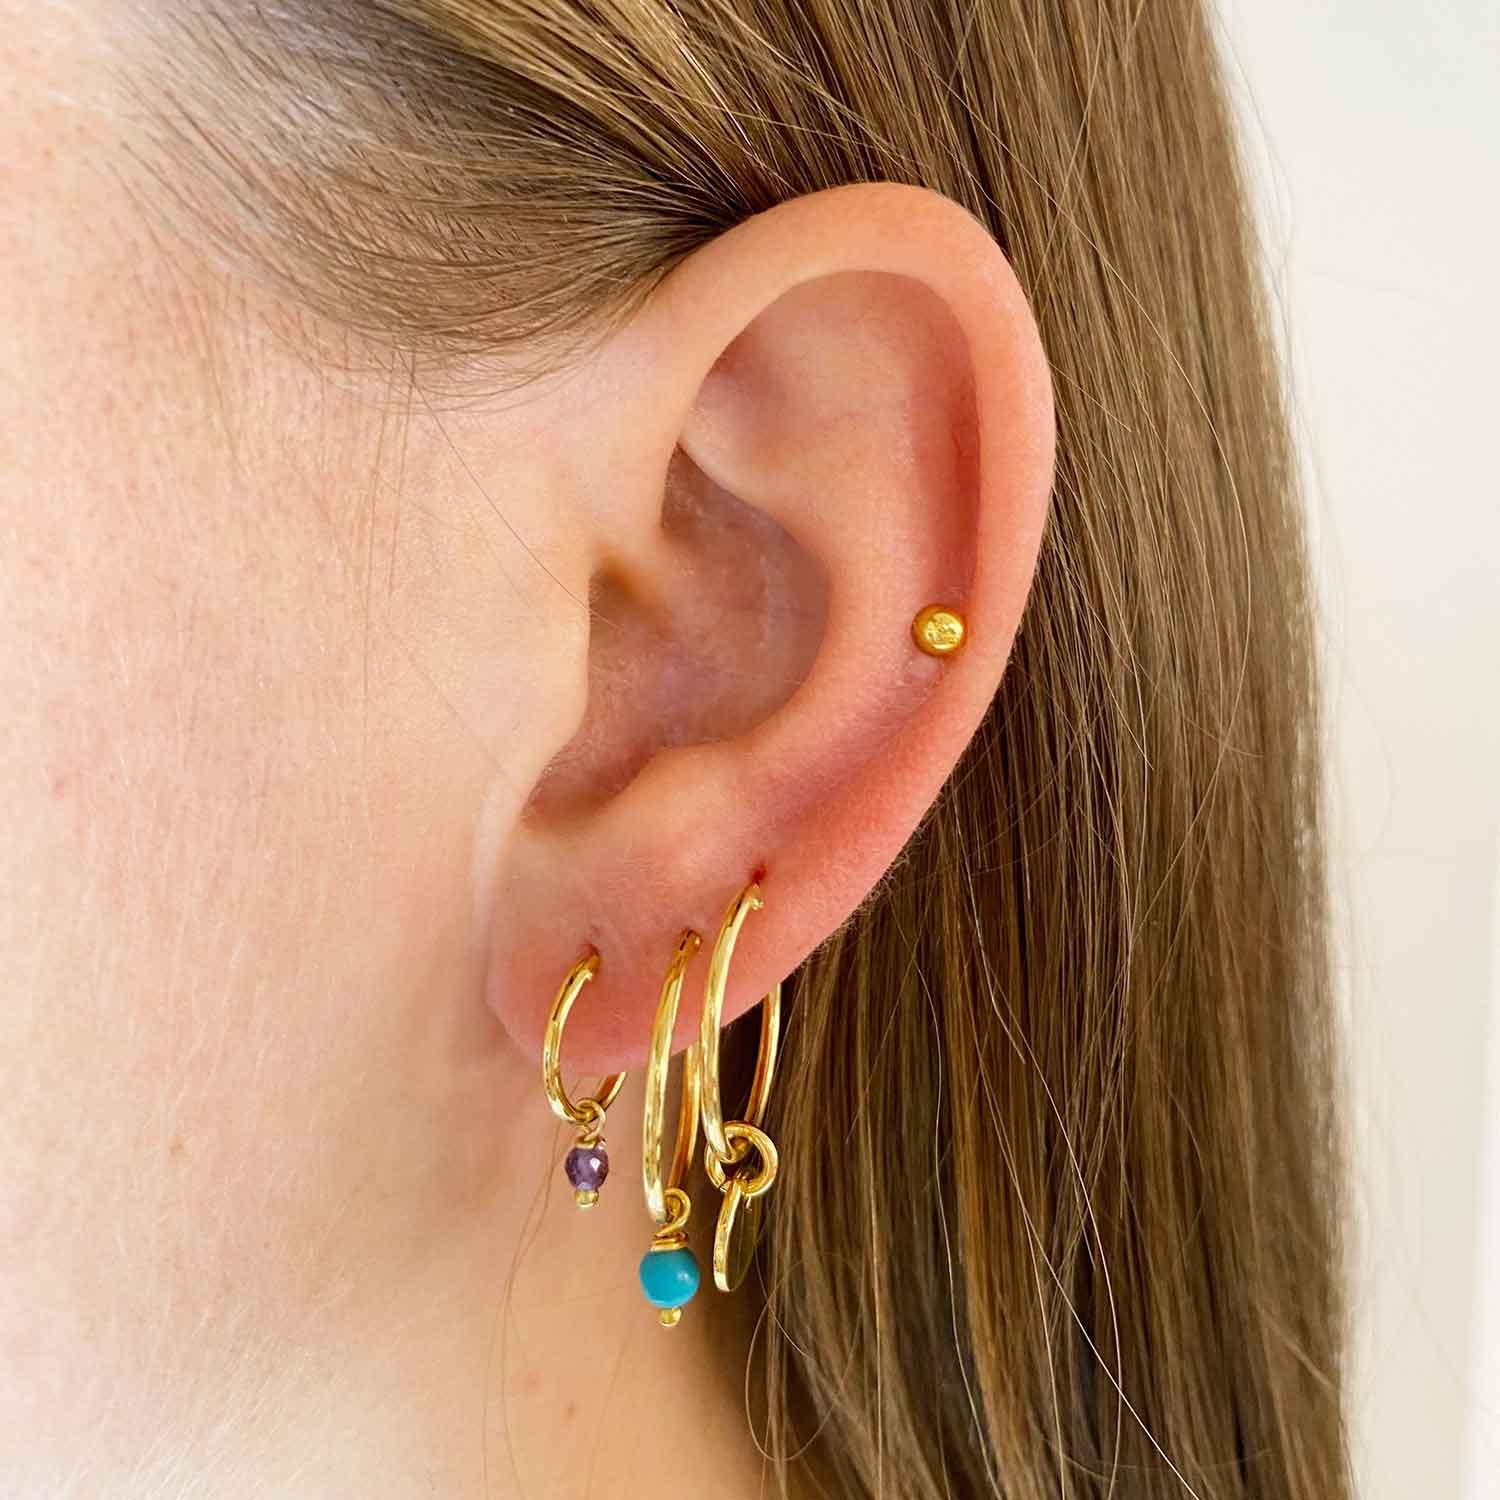 Top 198+ 4mm stud earrings best